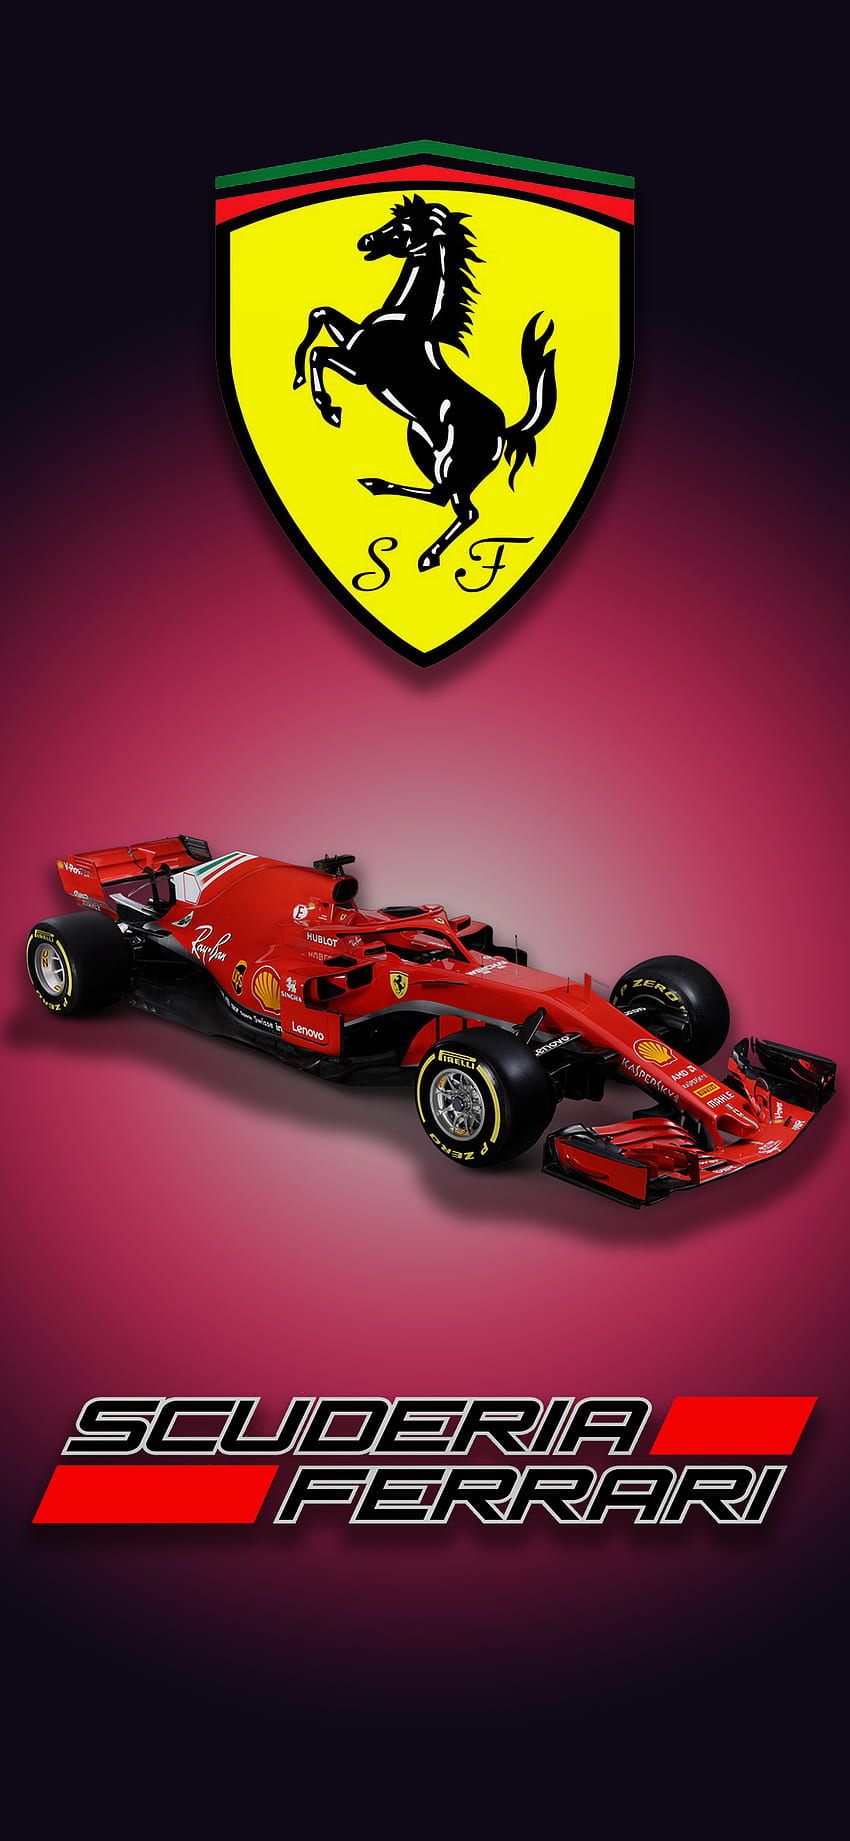 Scuderia Ferrari F1, formula one, red, formula one tyres, racing